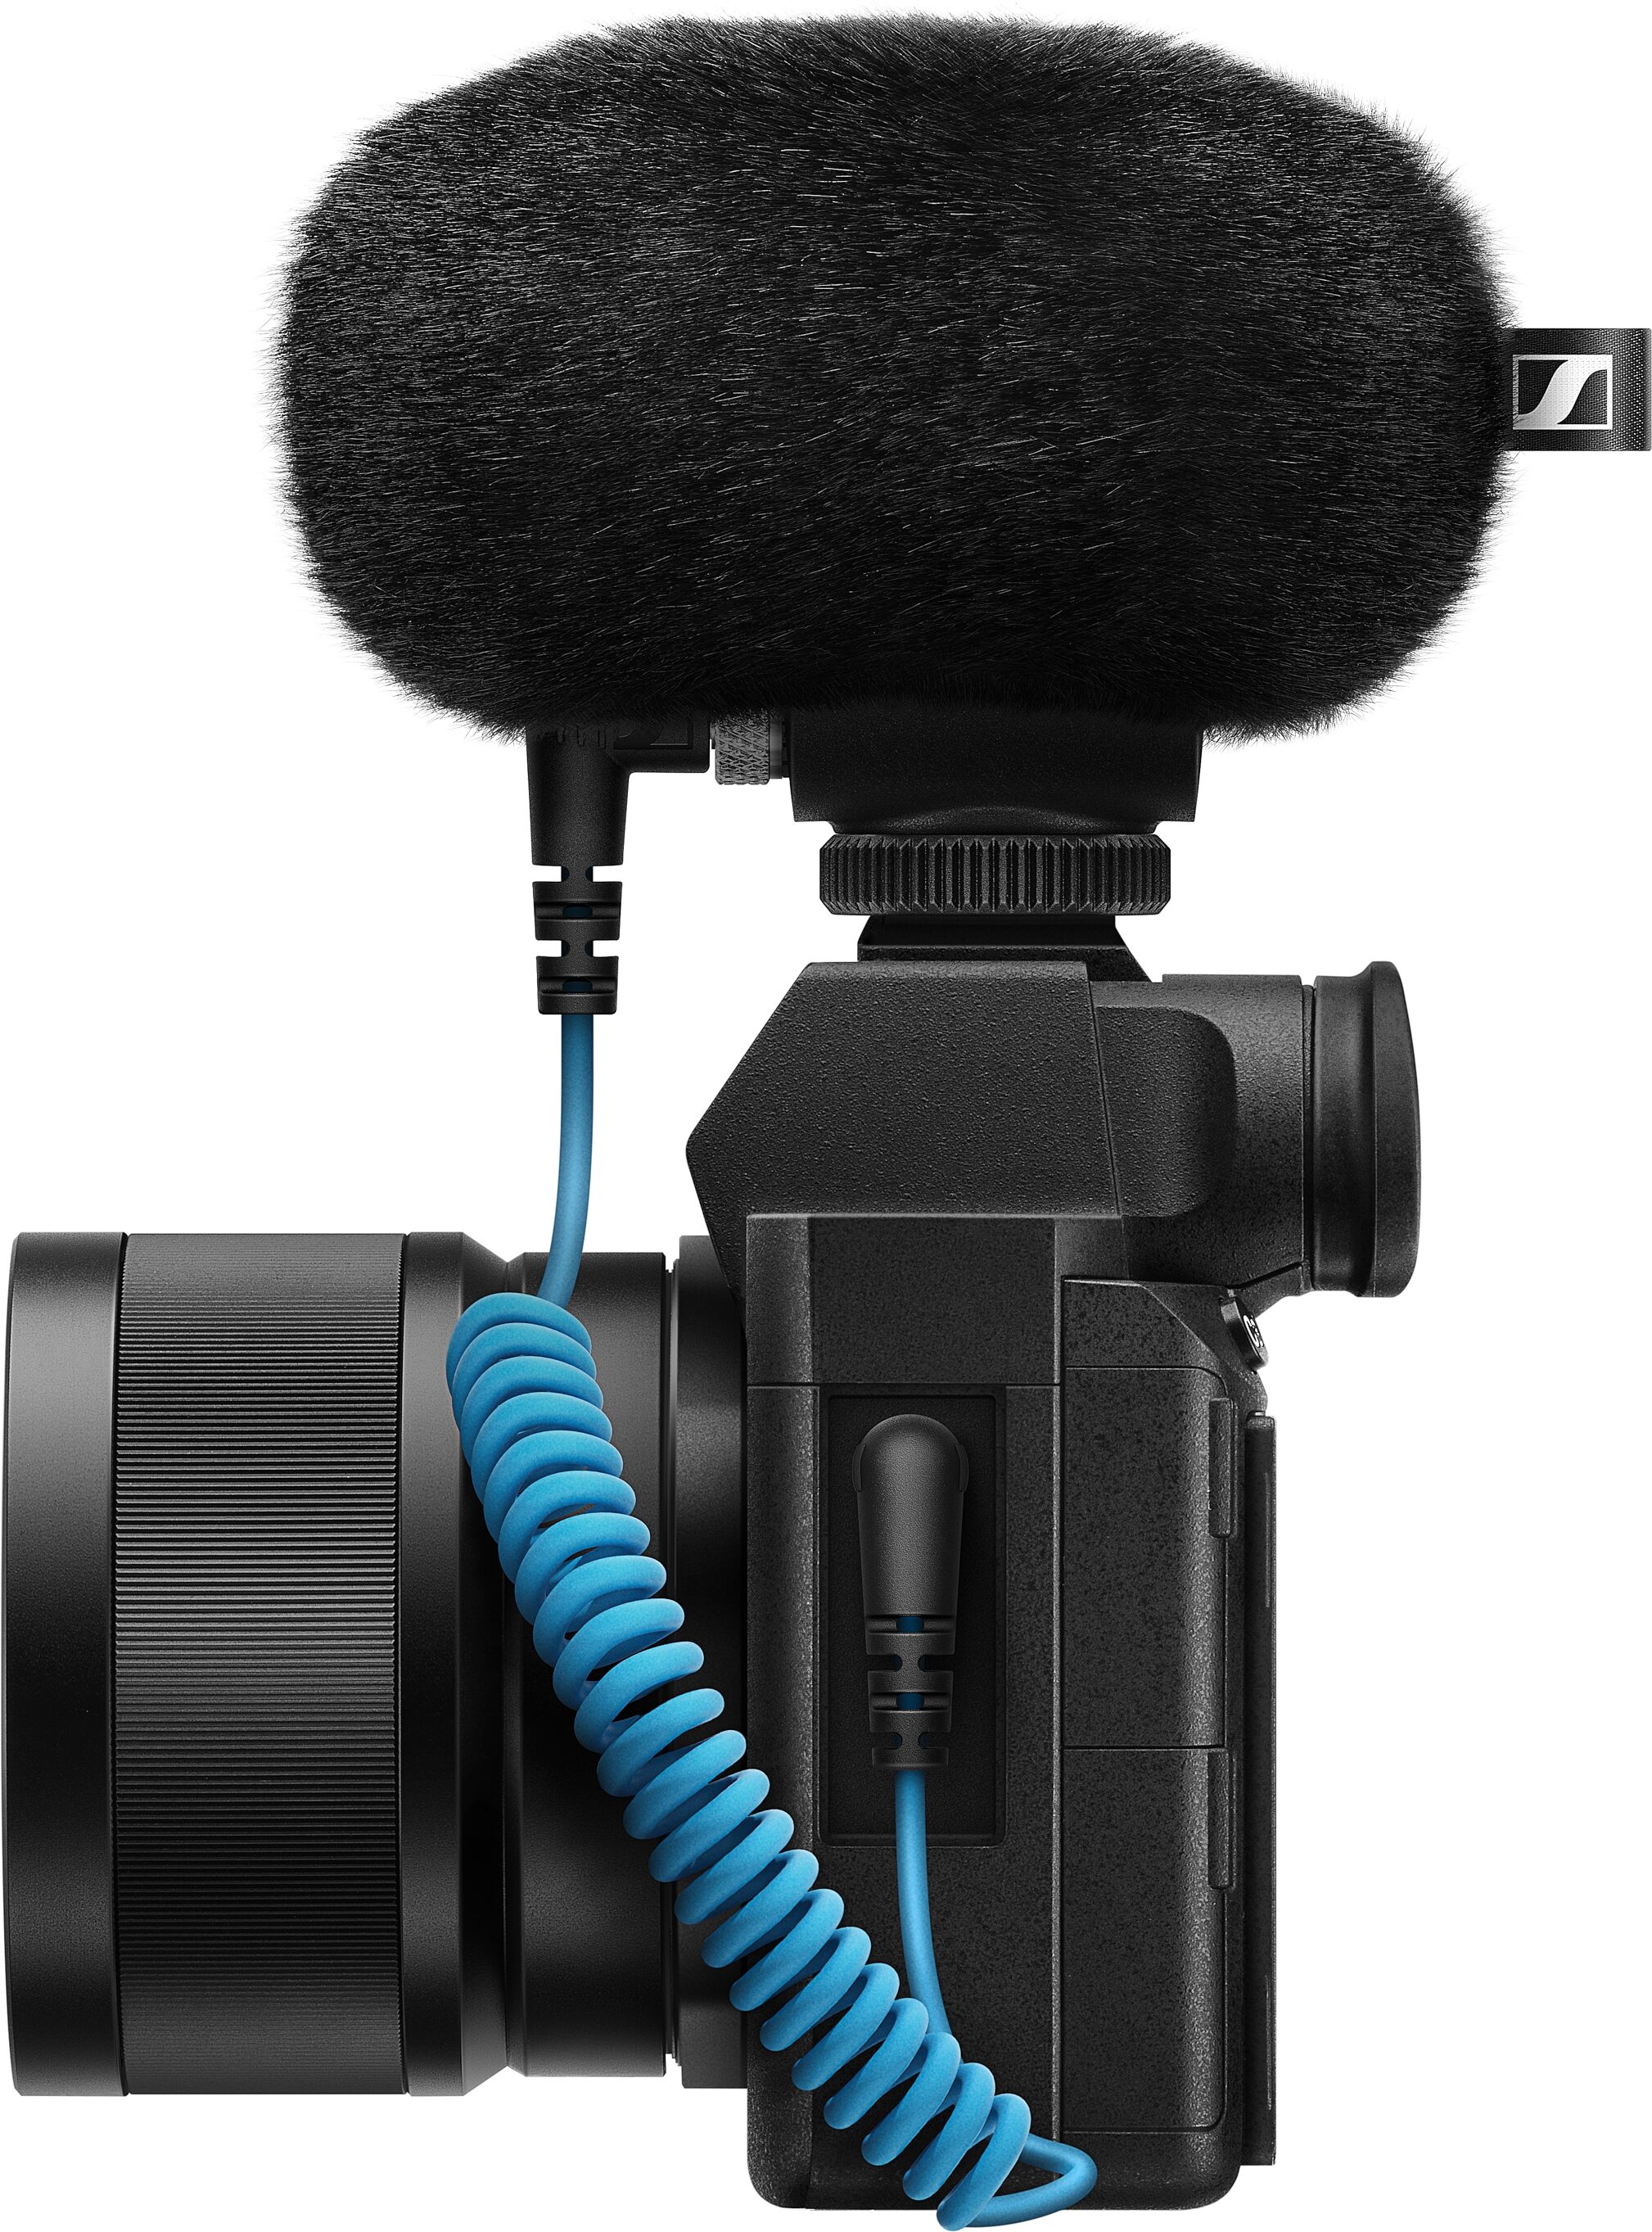 Sennheiser MKE 200 Supercardioid On-Camera Microphone | zZounds